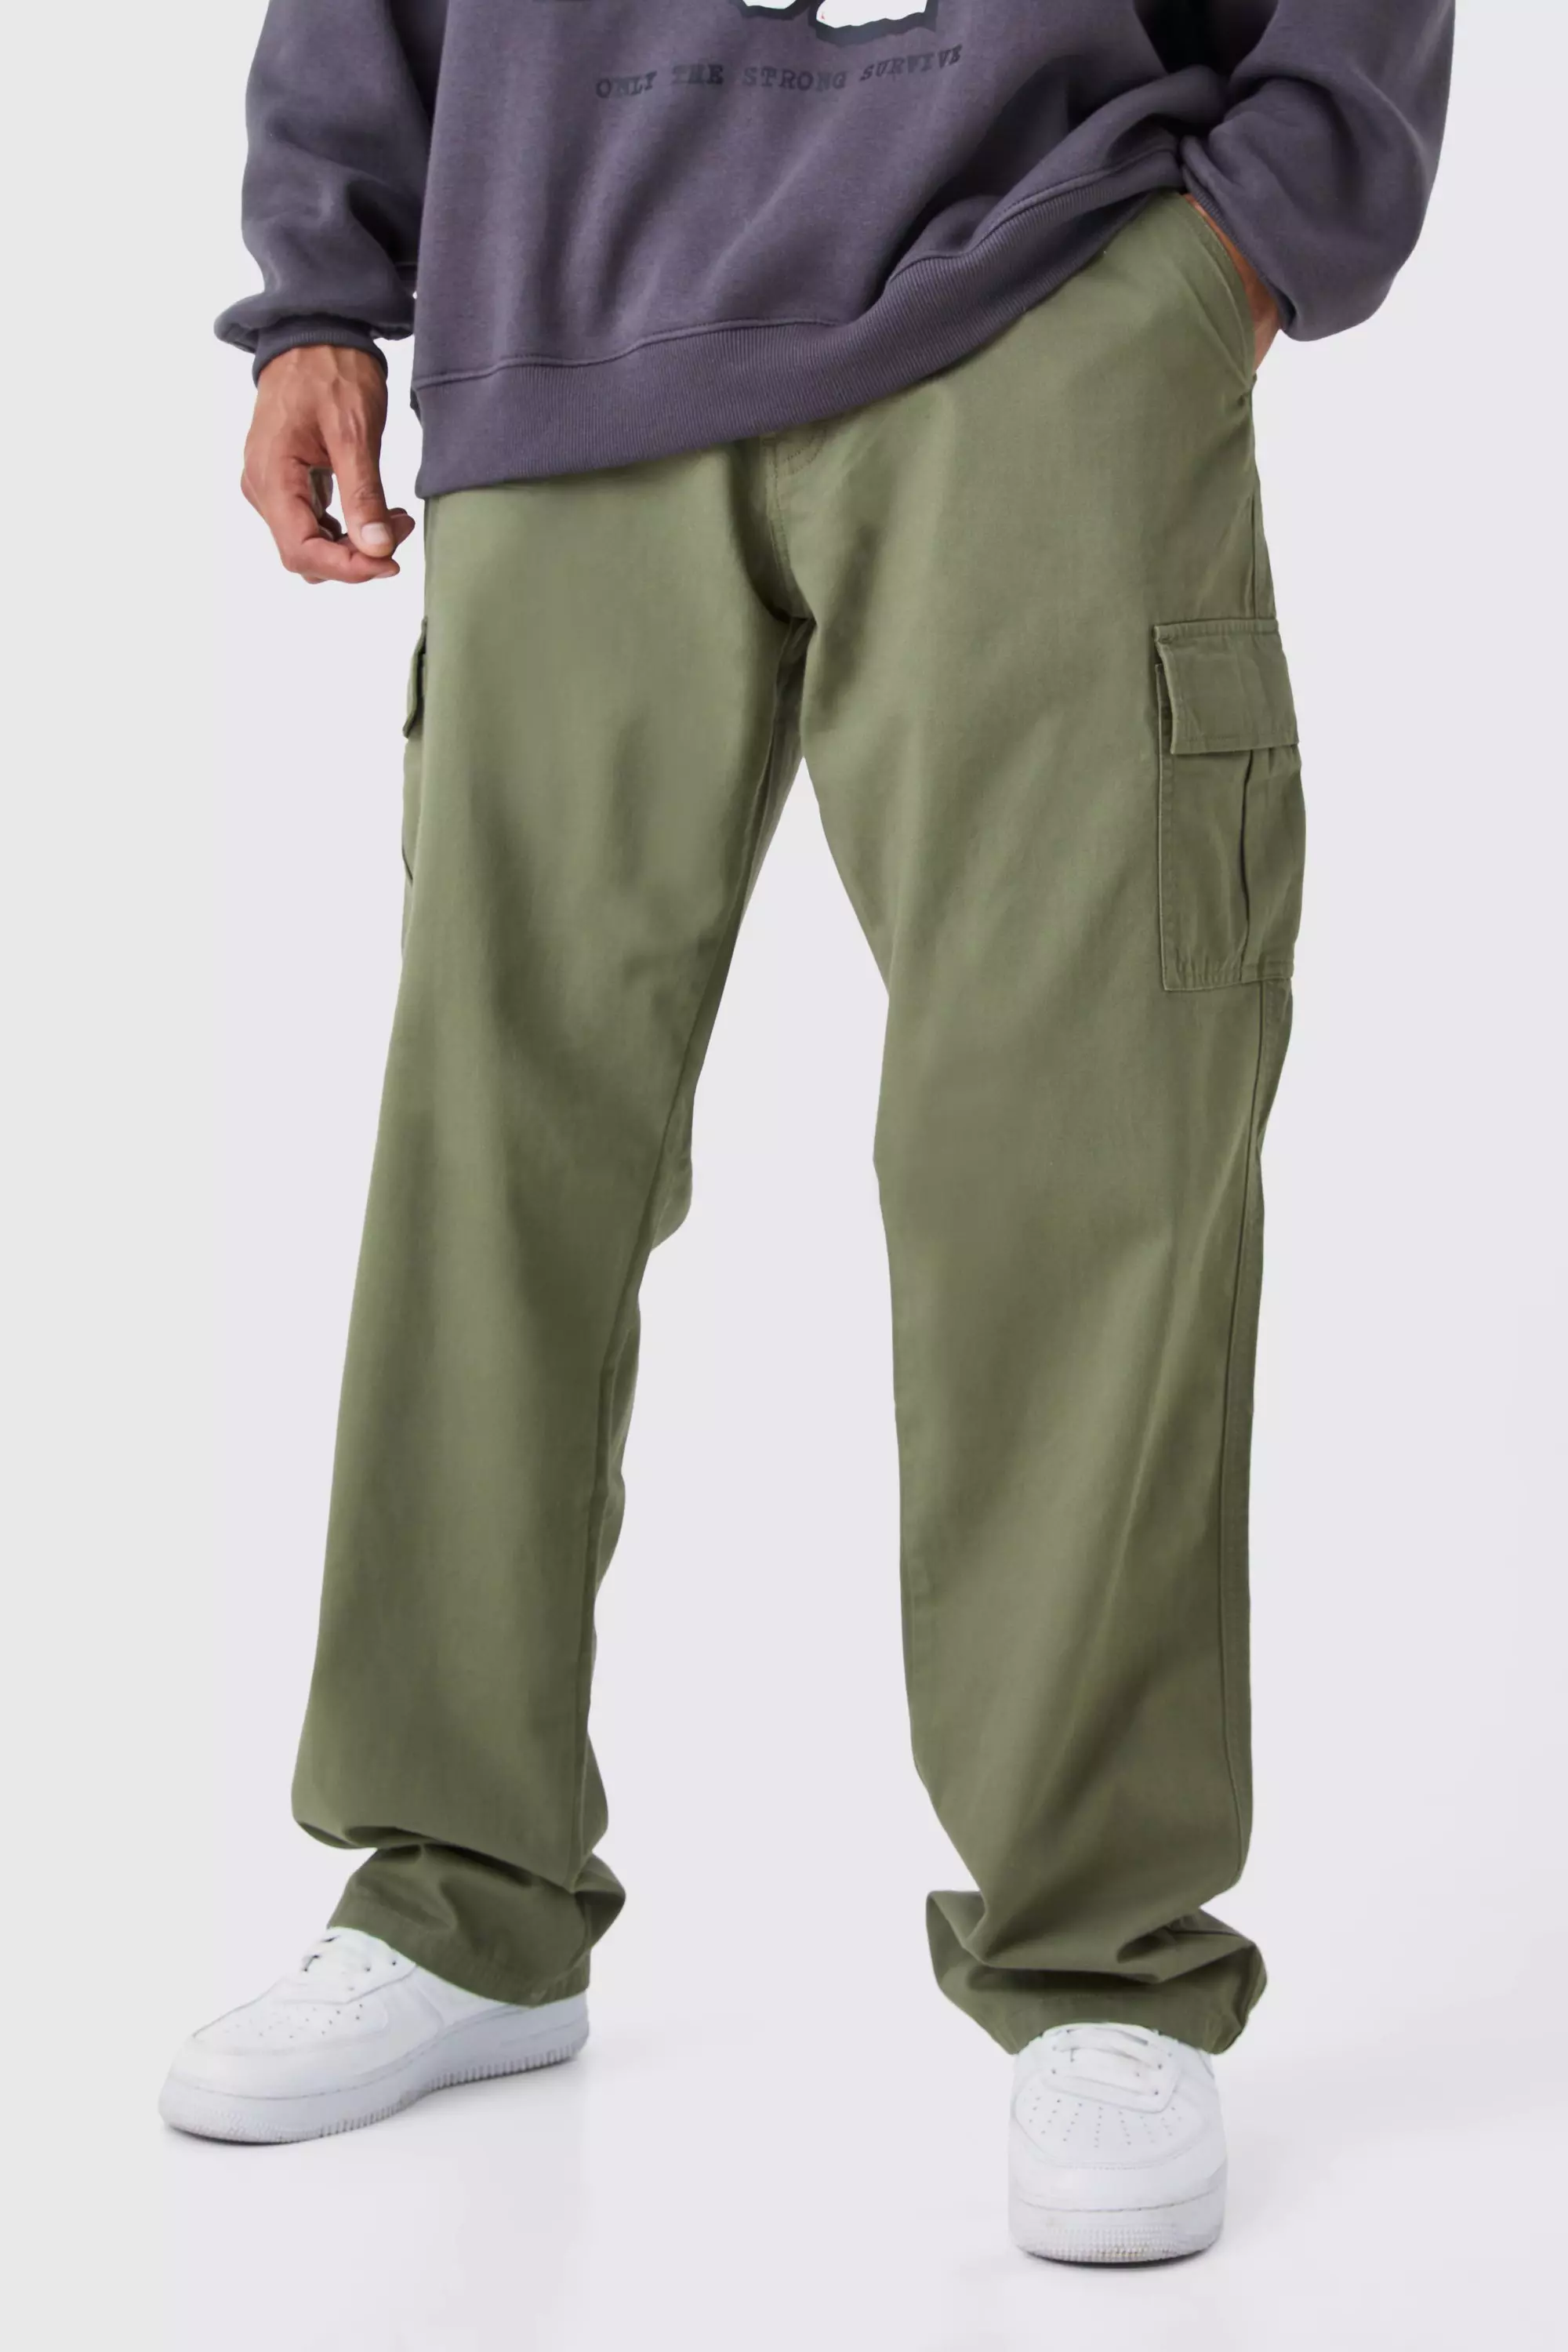 Men's Khaki Cargo Trousers, Khaki Cargo Pants